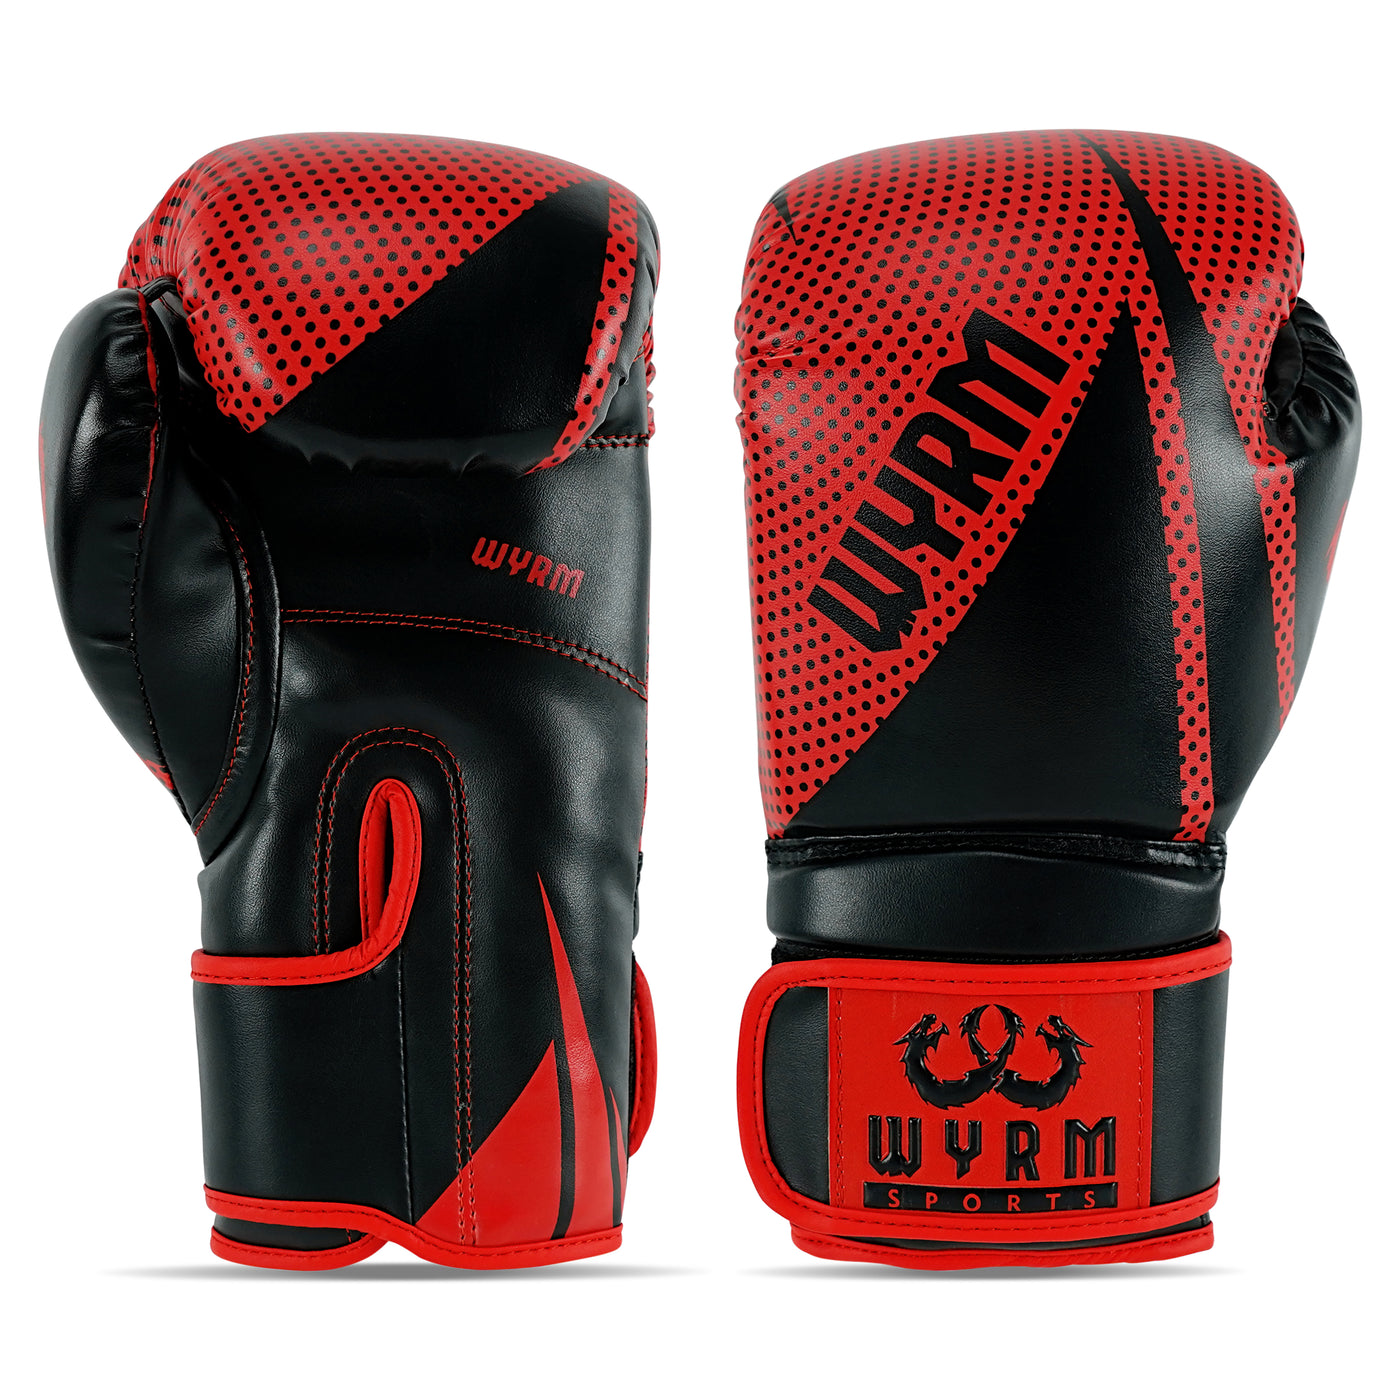 Krusher Red/Black Leather Boxing Gloves